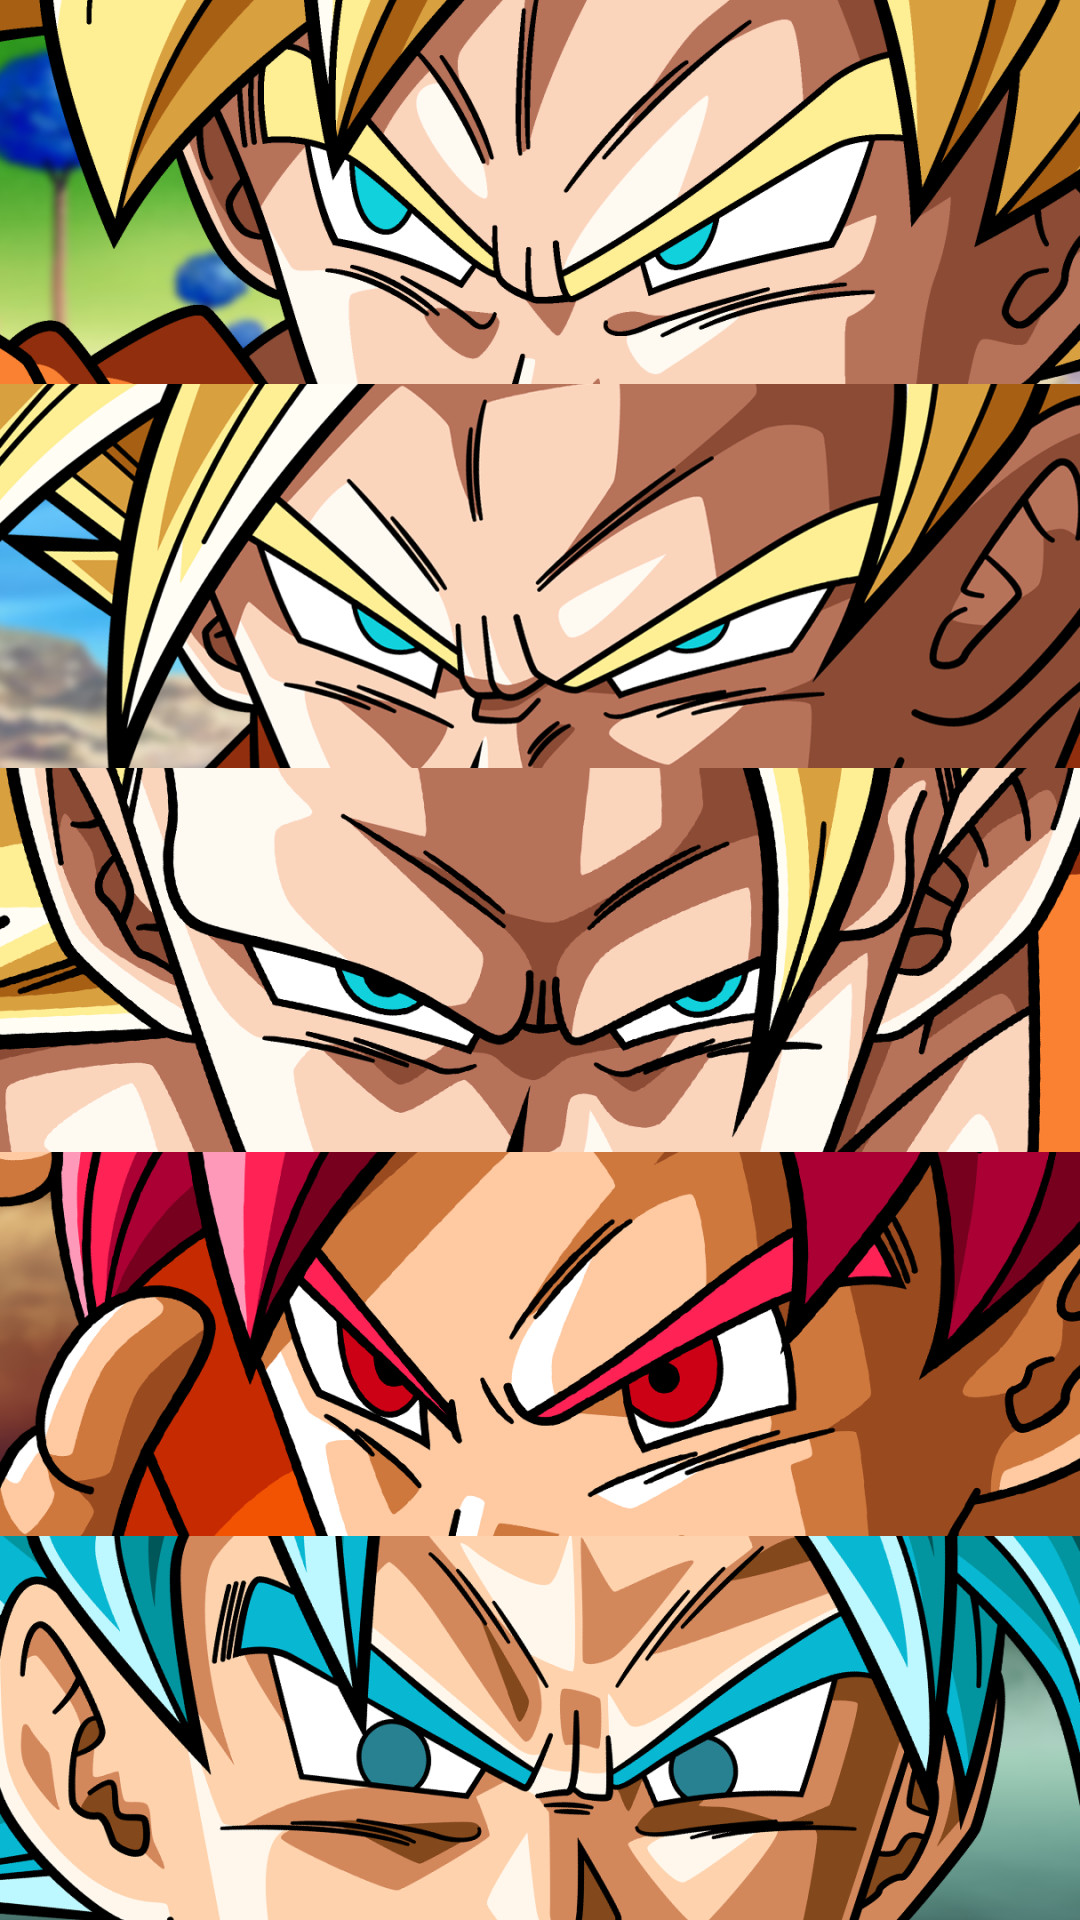 Goku Iphone Wallpaper 64 Images